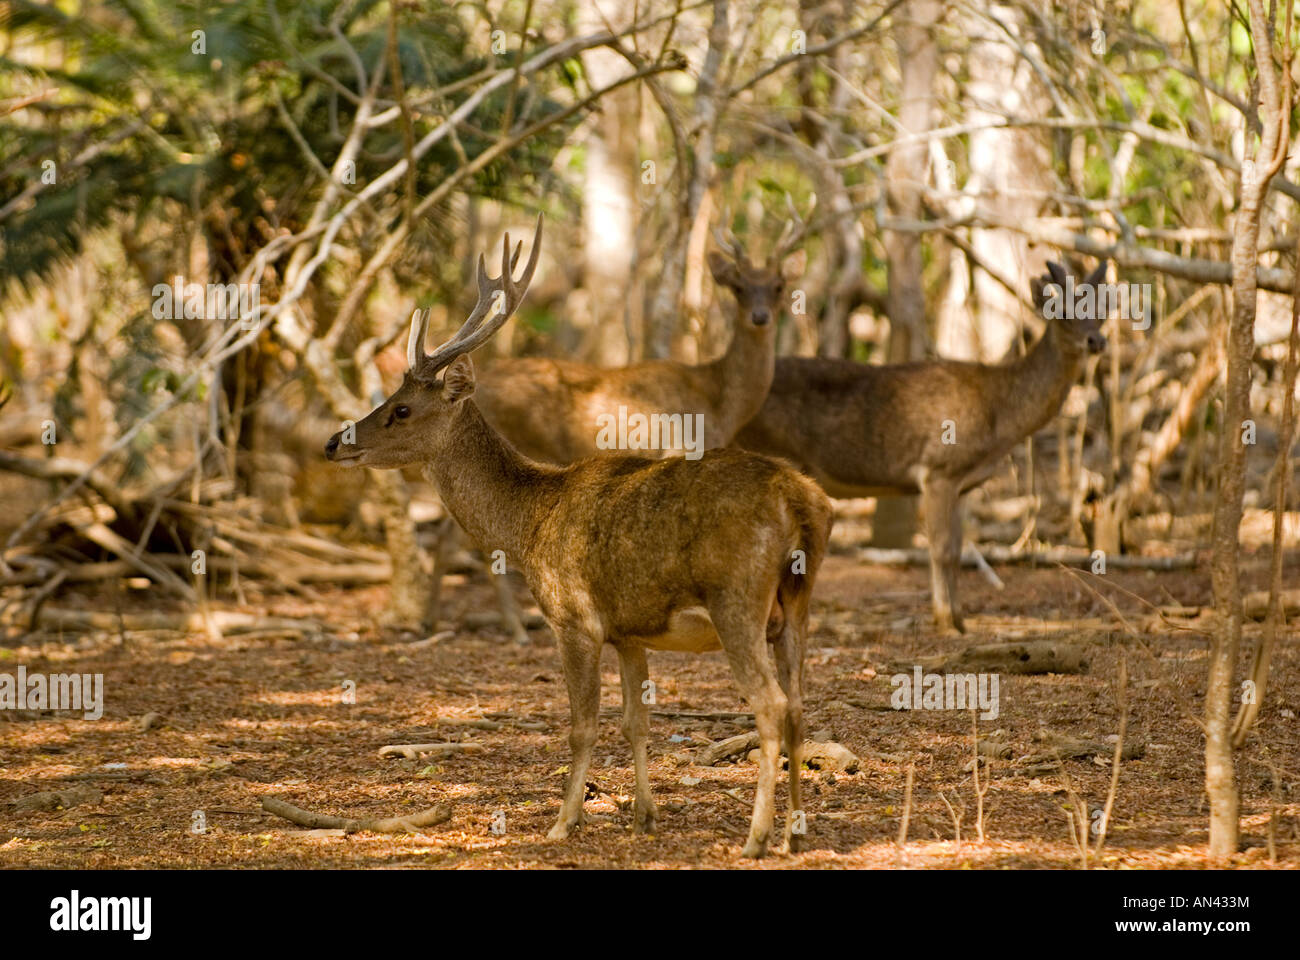 Deers one of the major prey of Komodo dragons in Komodo Island Indonesia Stock Photo